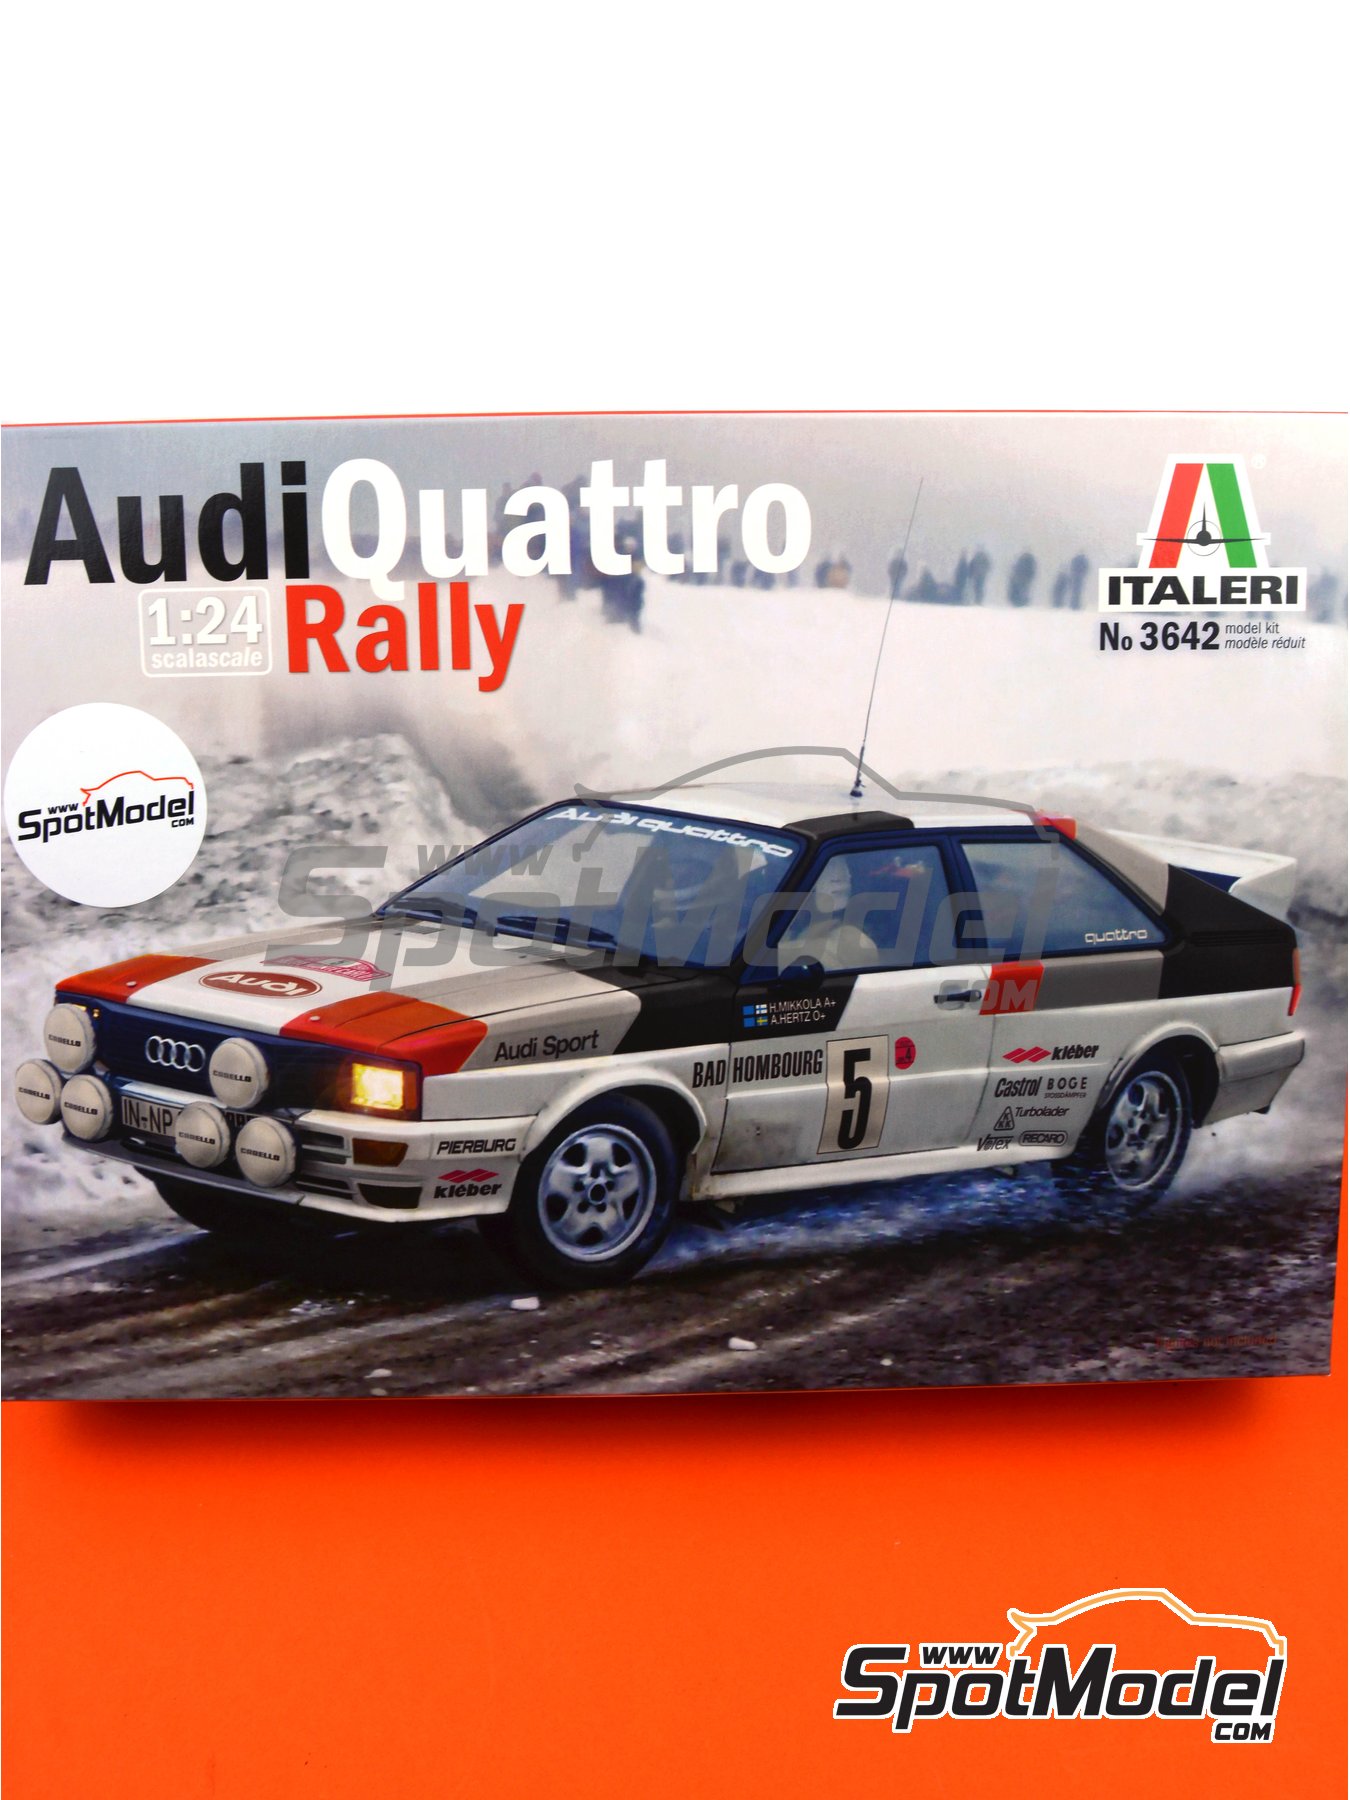 Maqueta 1/24 - Audi Quattro Rallye